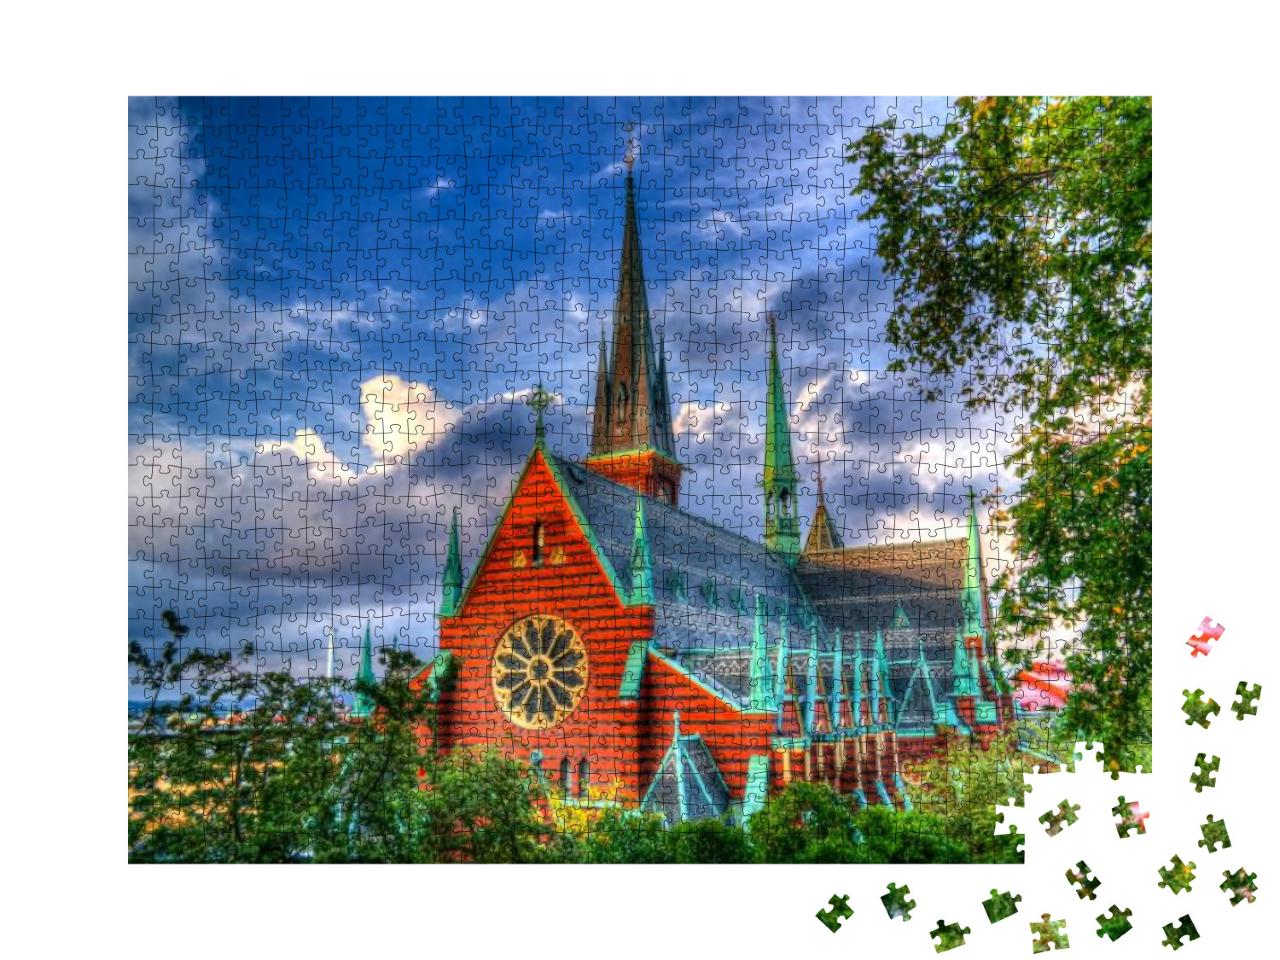 Exterior View to Oscar Fredriks Kyrka, Gothenburg, Sweden... Jigsaw Puzzle with 1000 pieces